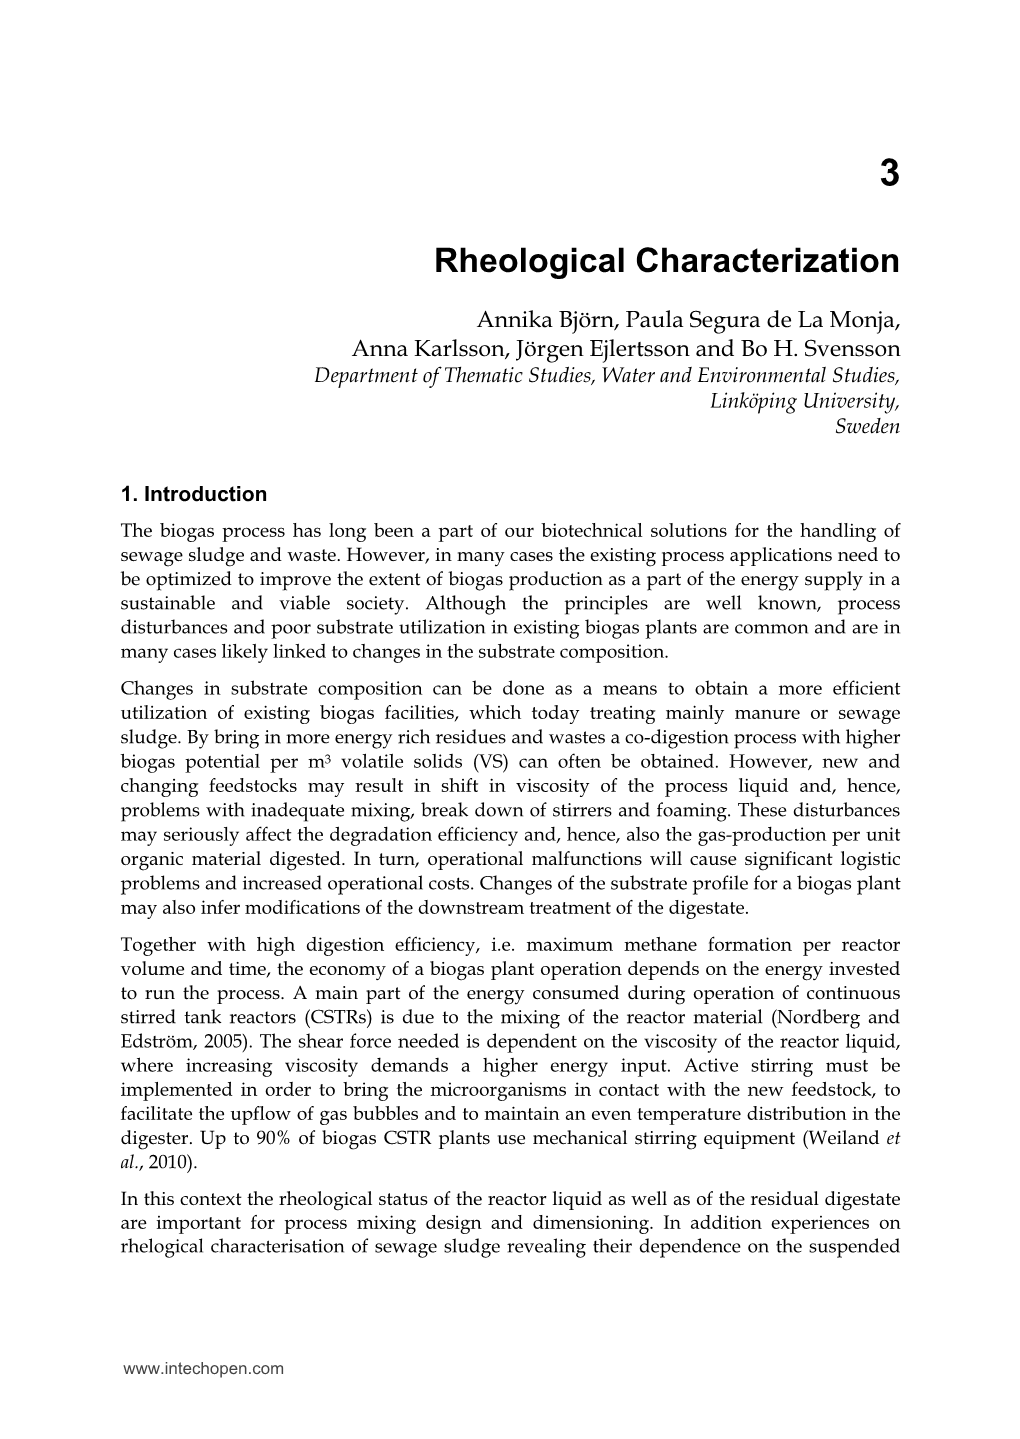 Rheological Characterization